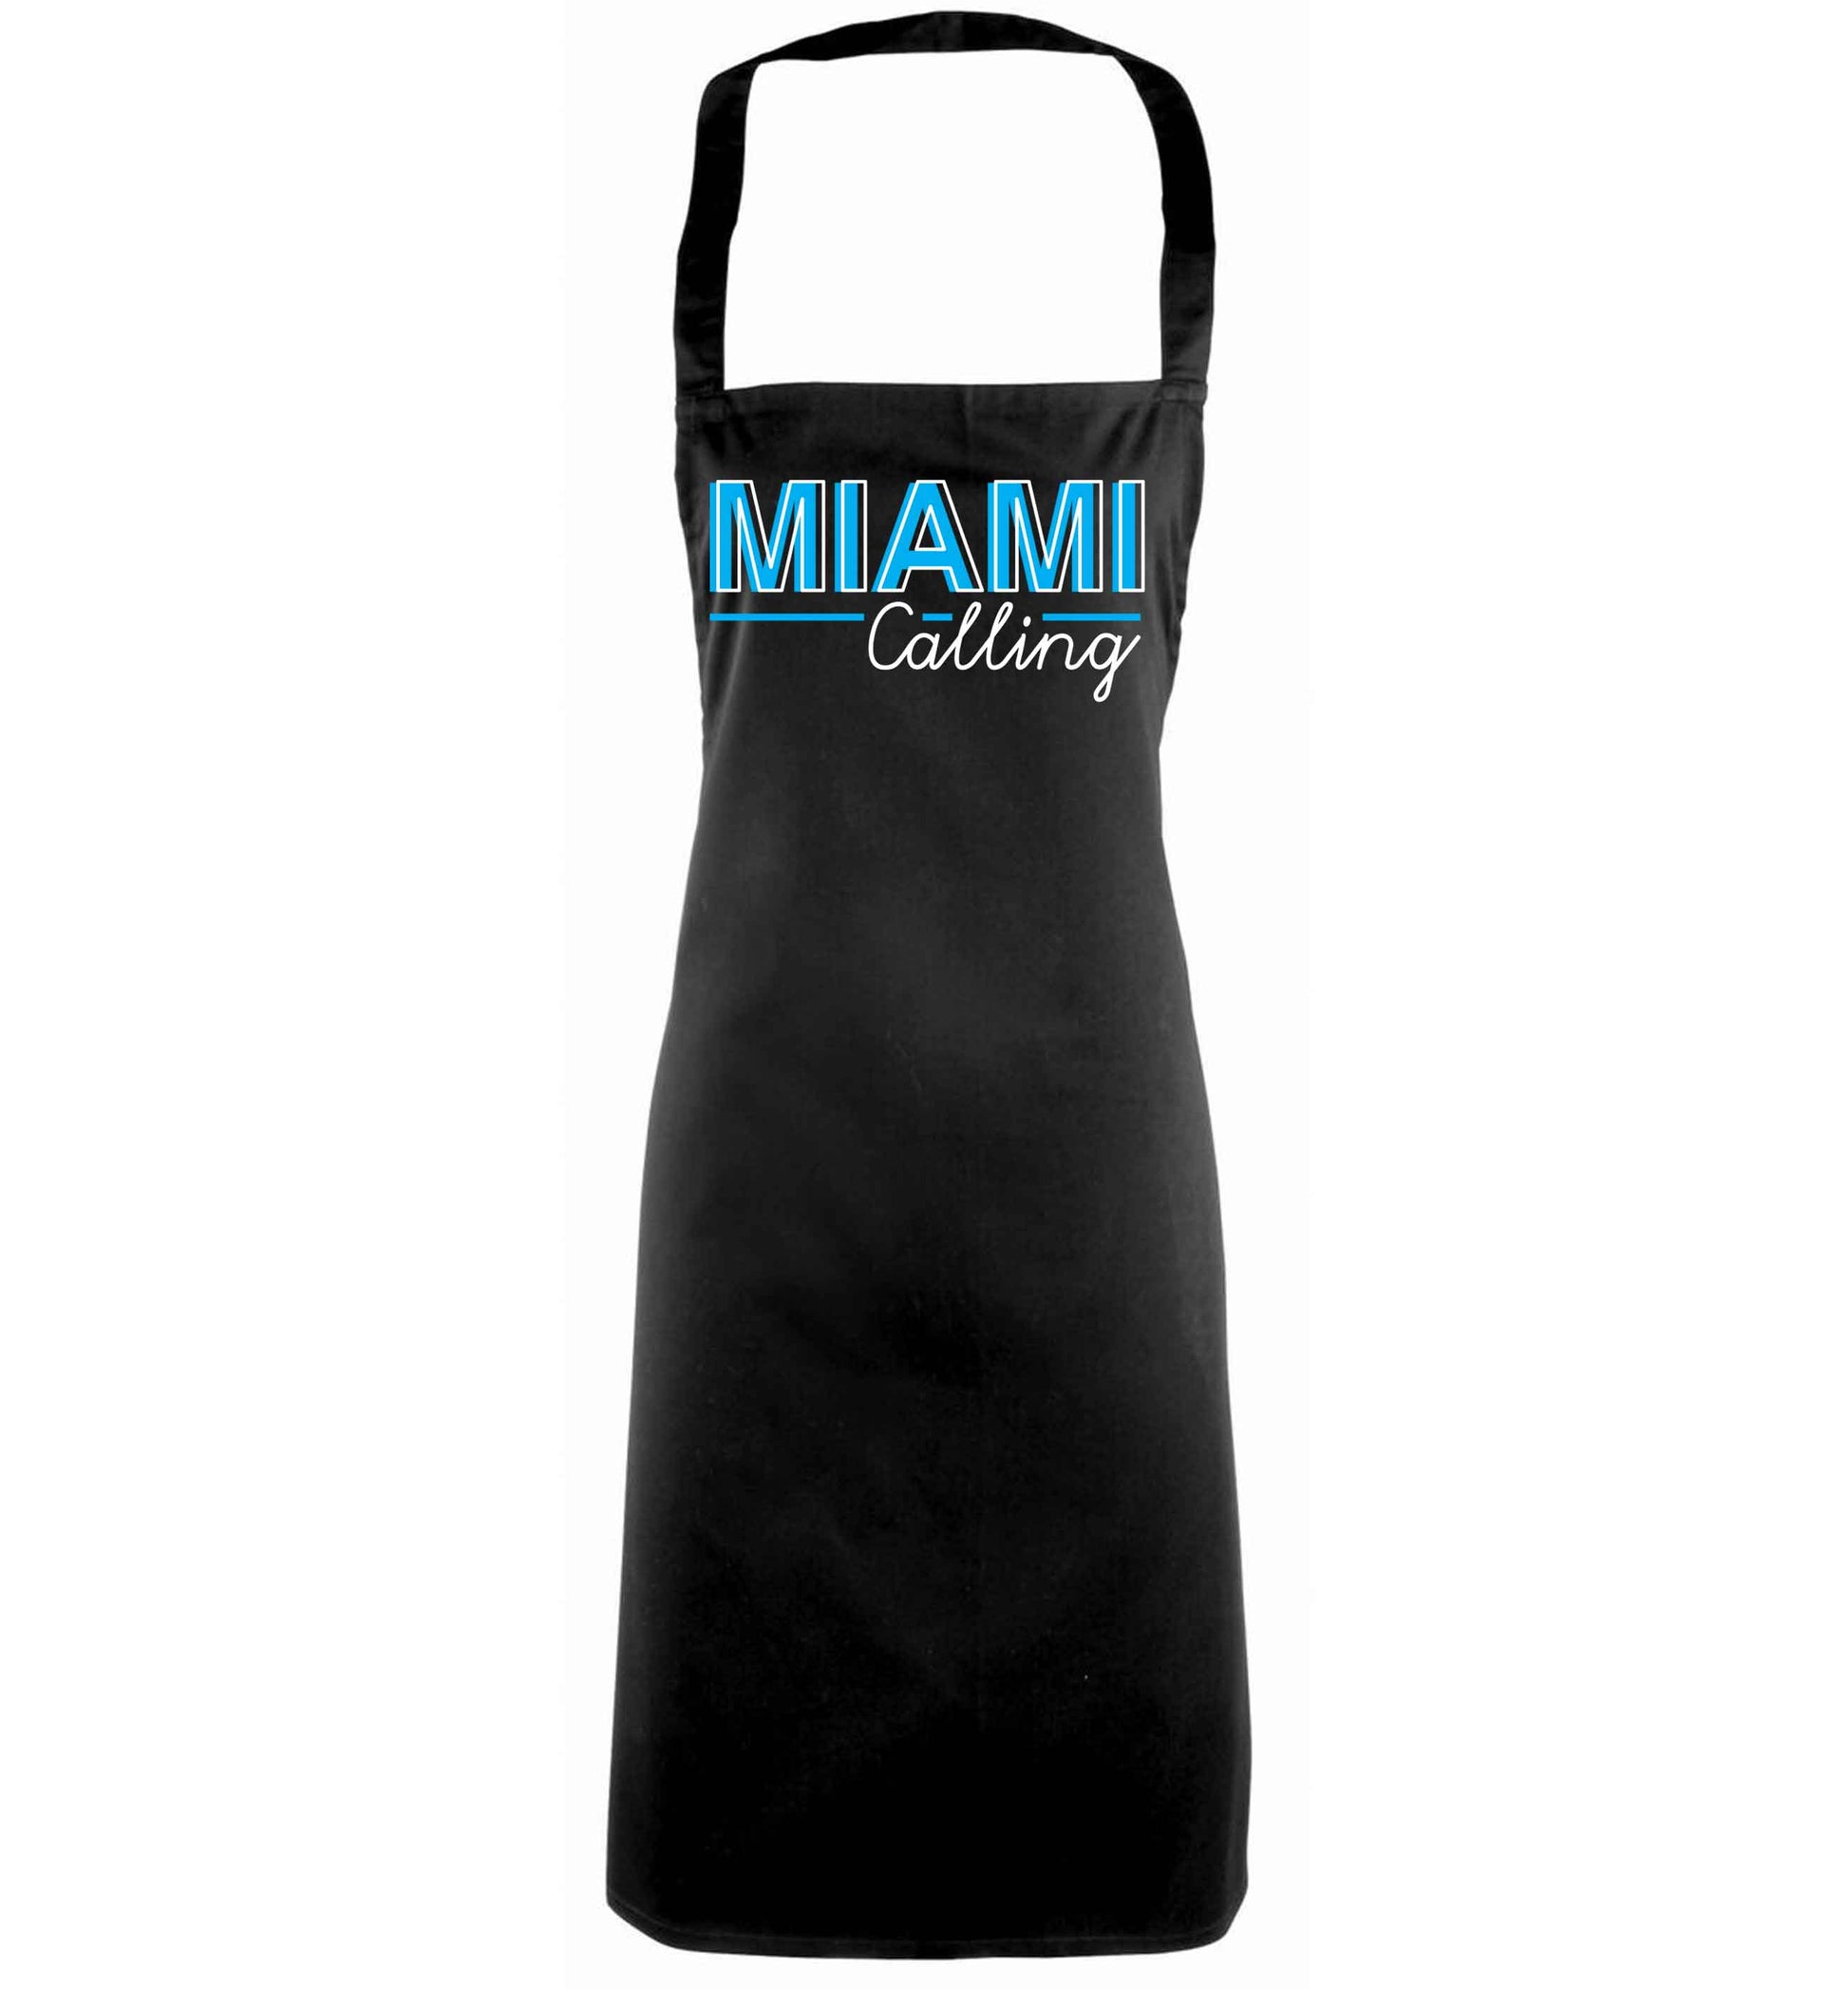 Miami calling black apron